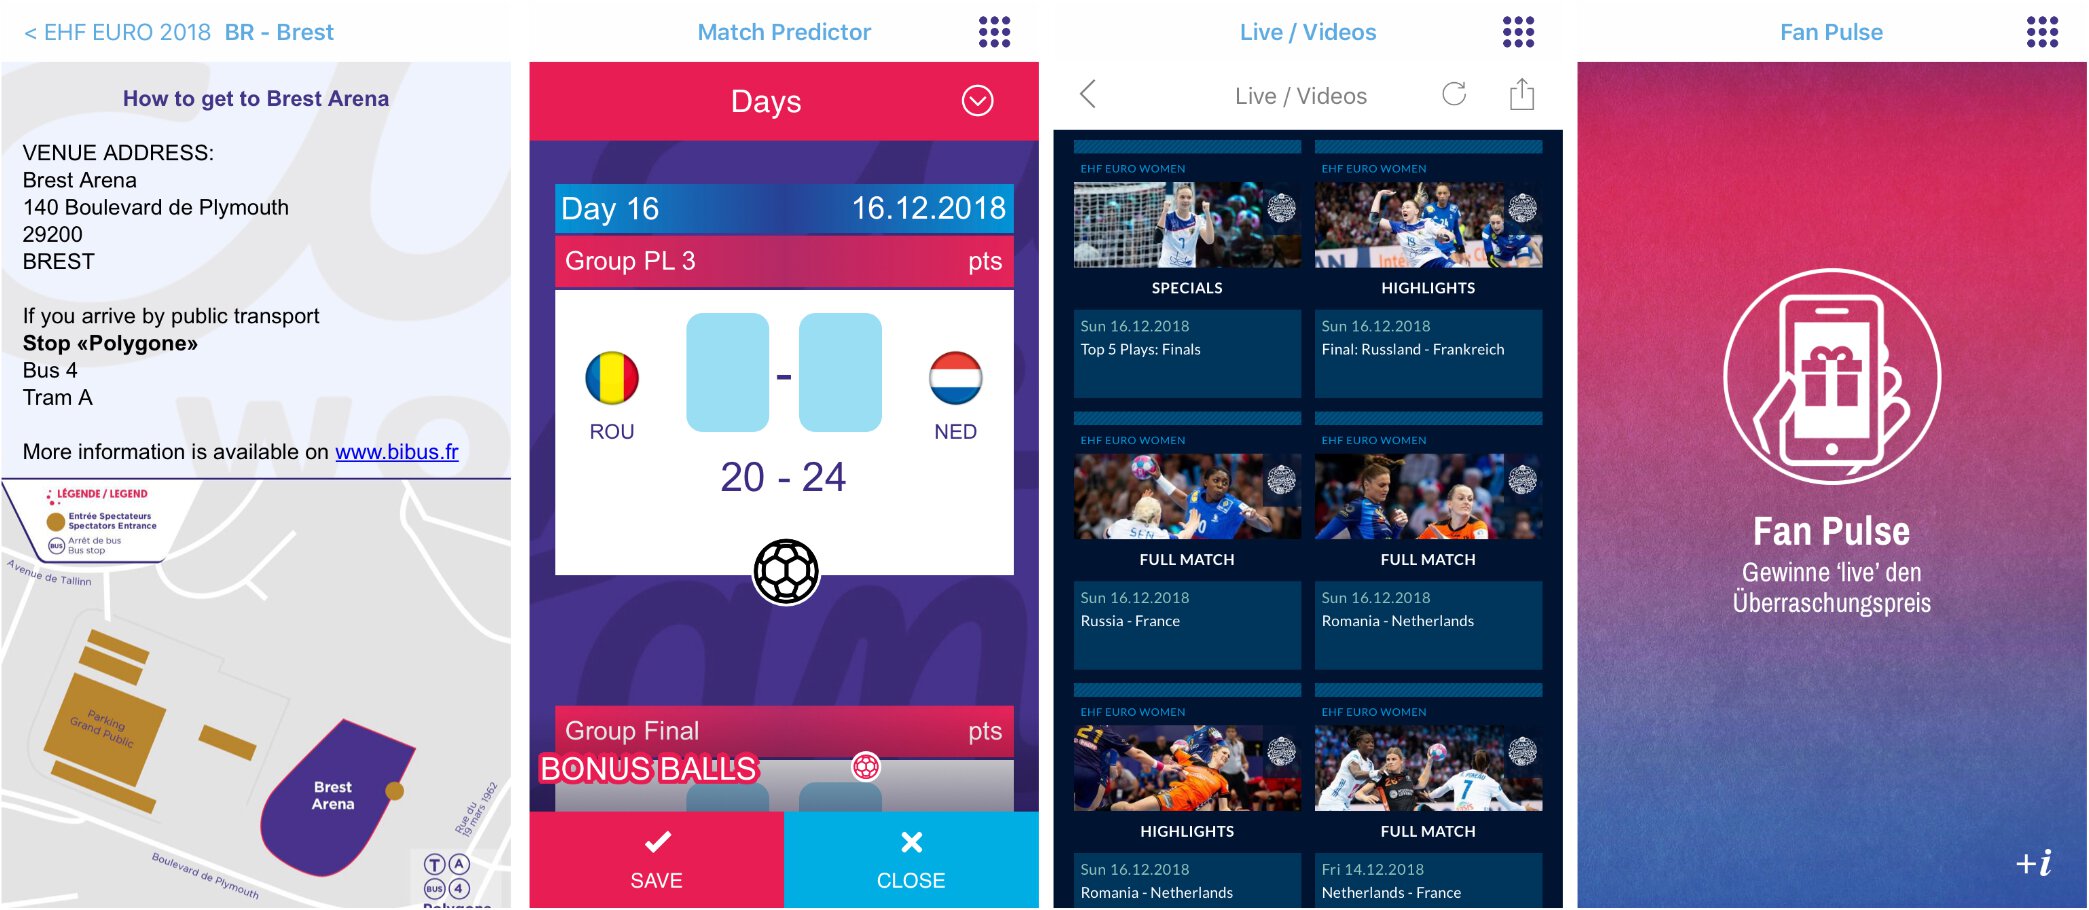 EHF Euro App